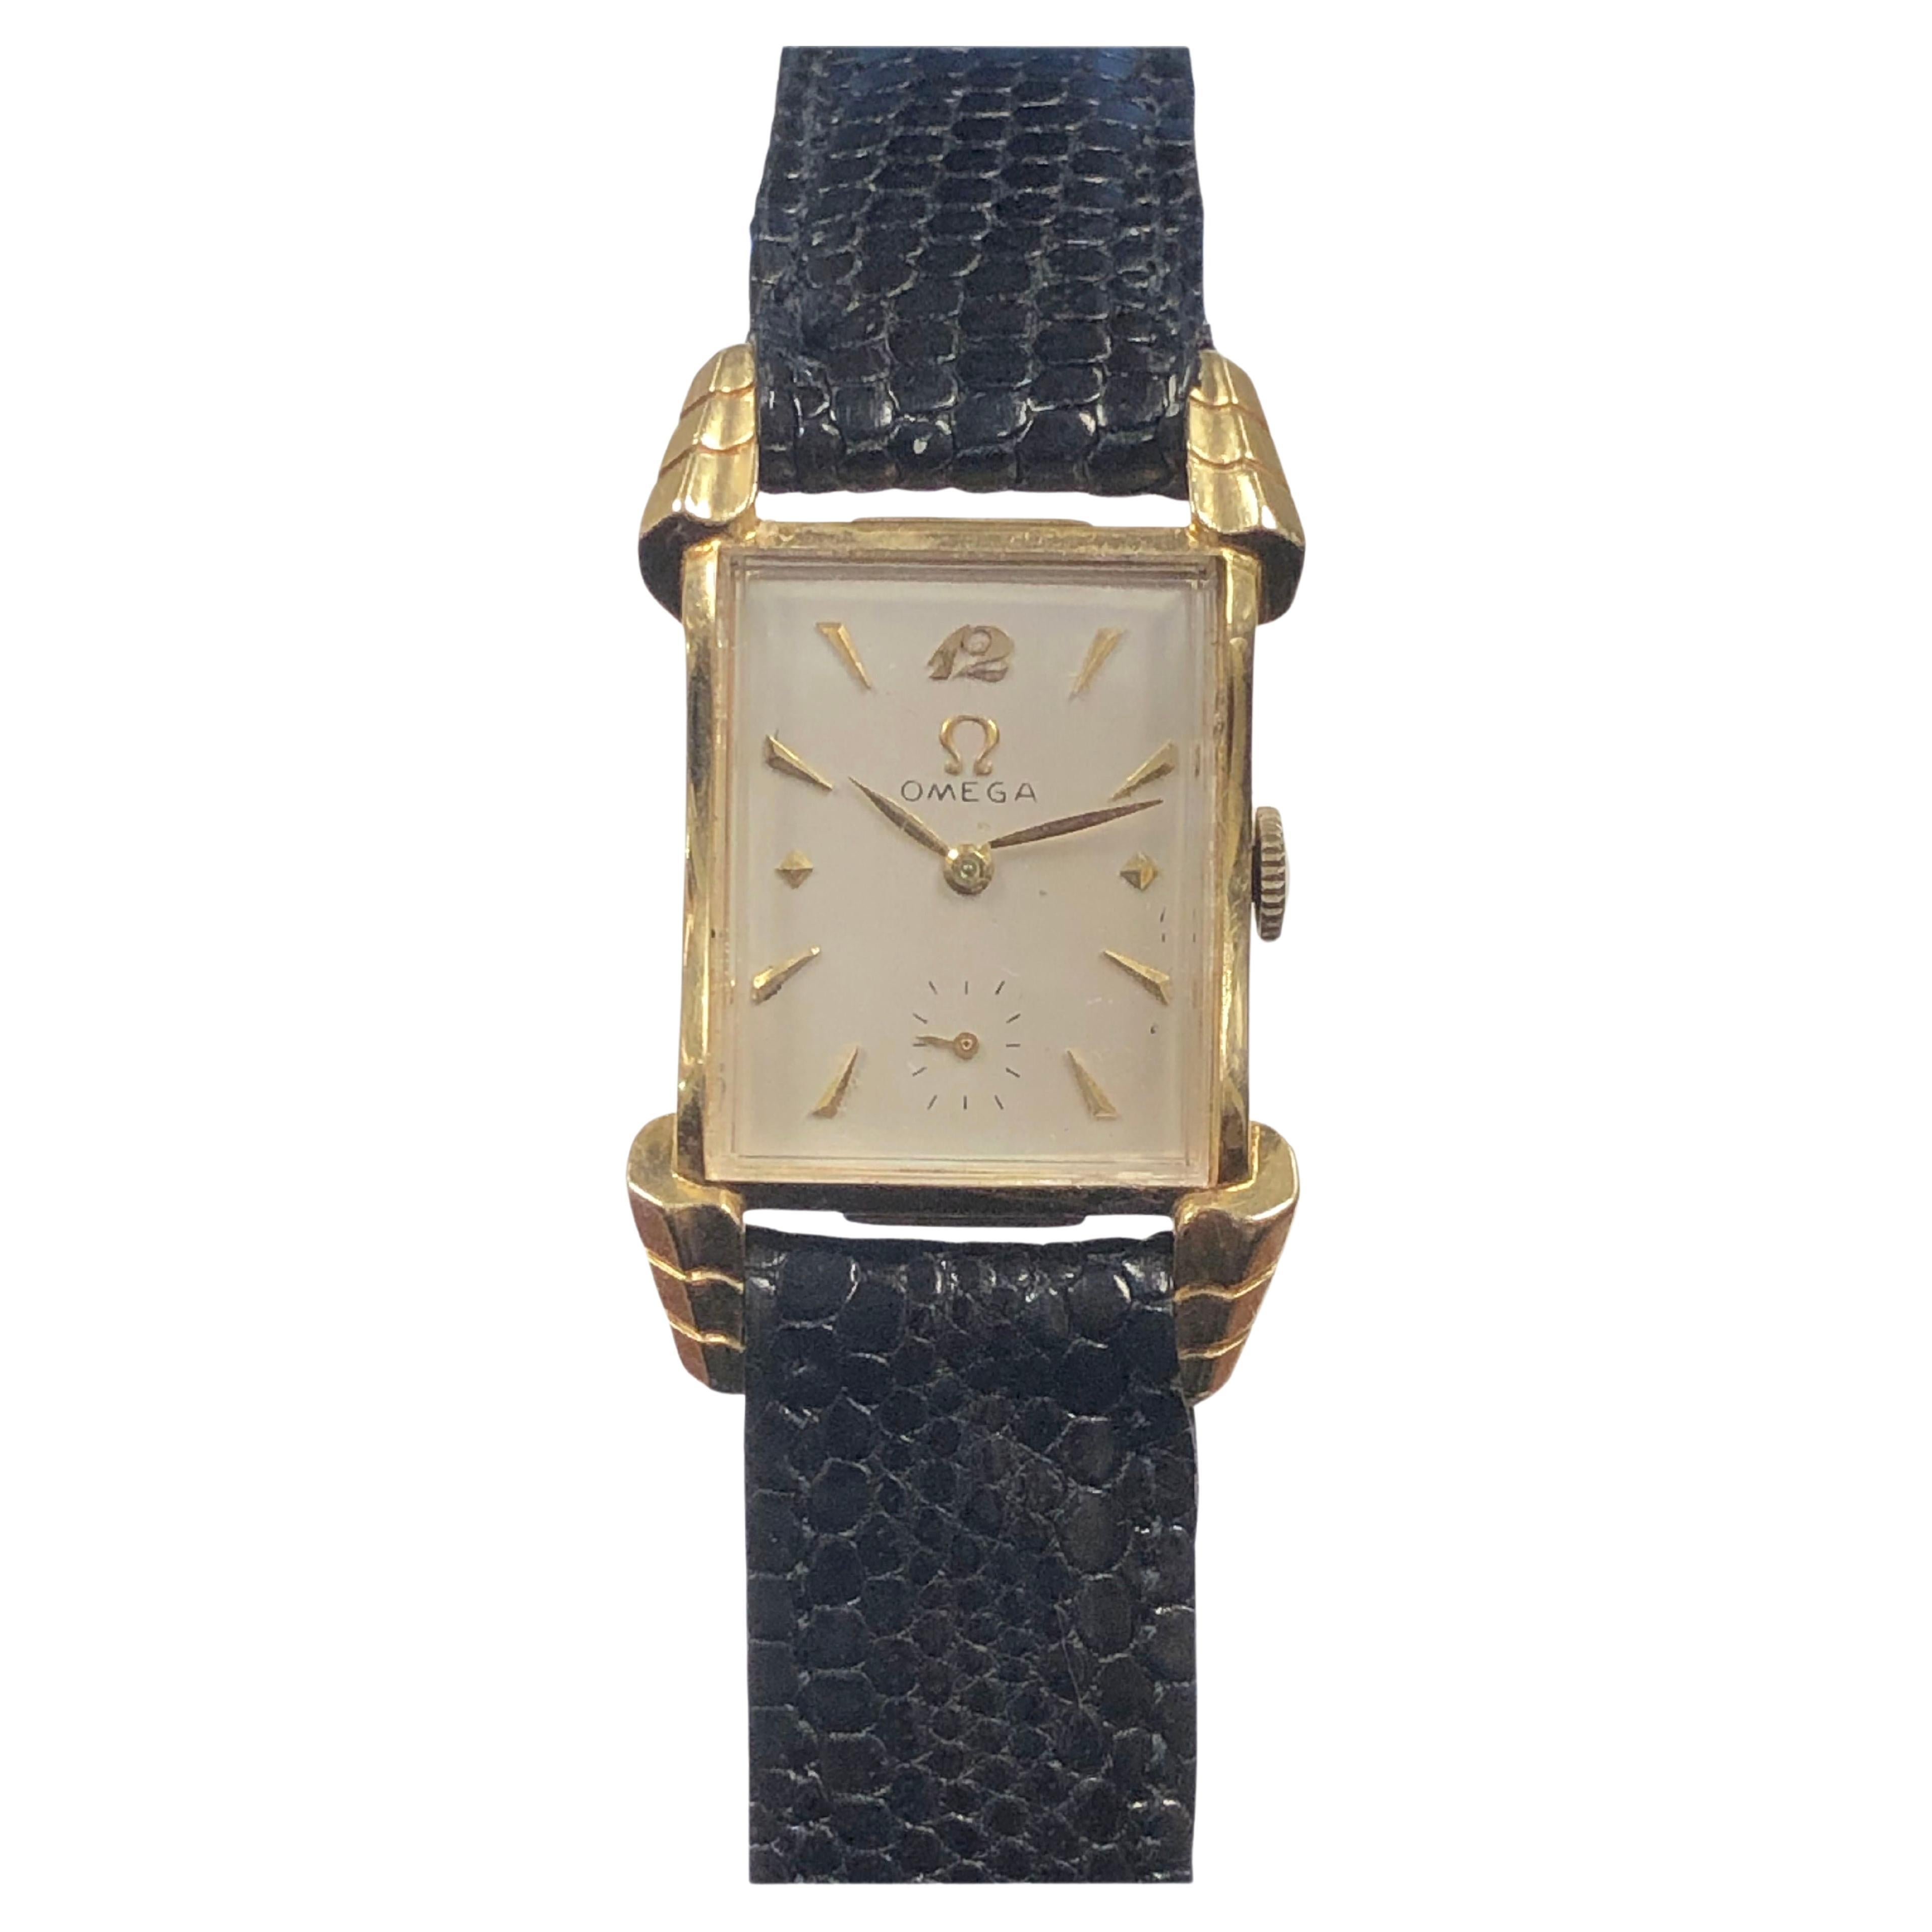 Vintage Art Deco Omega Yellow Gold Mechanical Wrist Watch